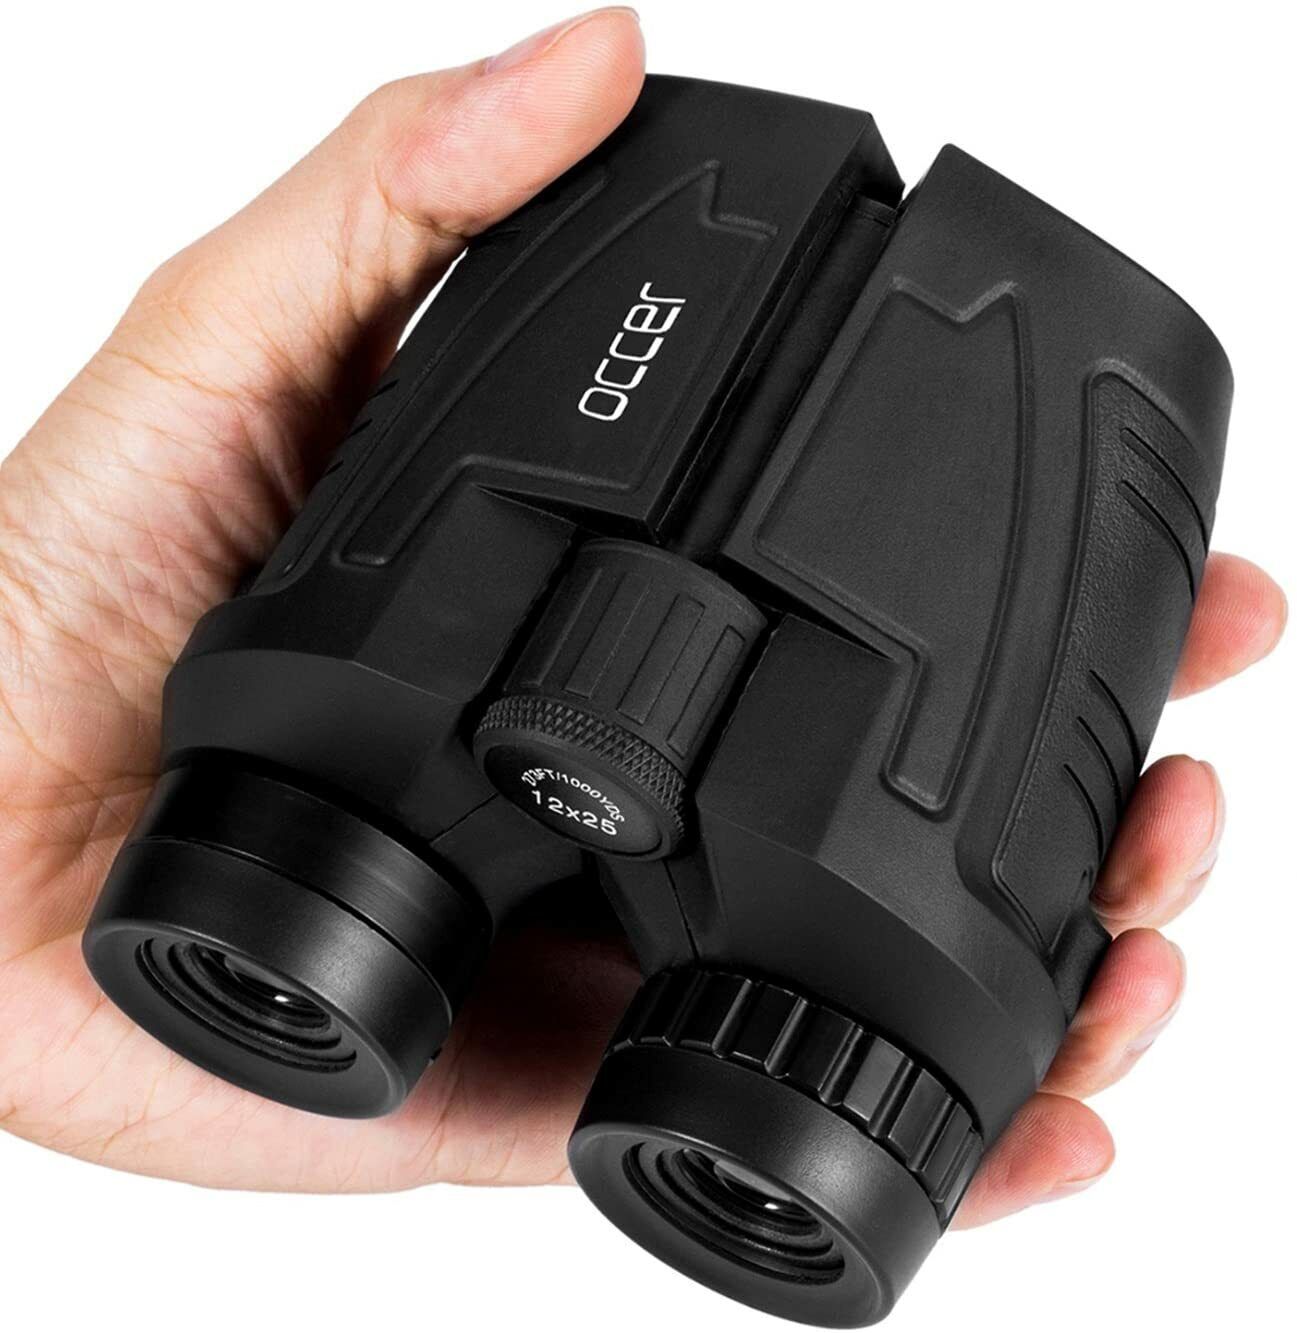 Binocular High Power Compact Waterproof Travel Hiking Hunting Easy Focus Outdoor